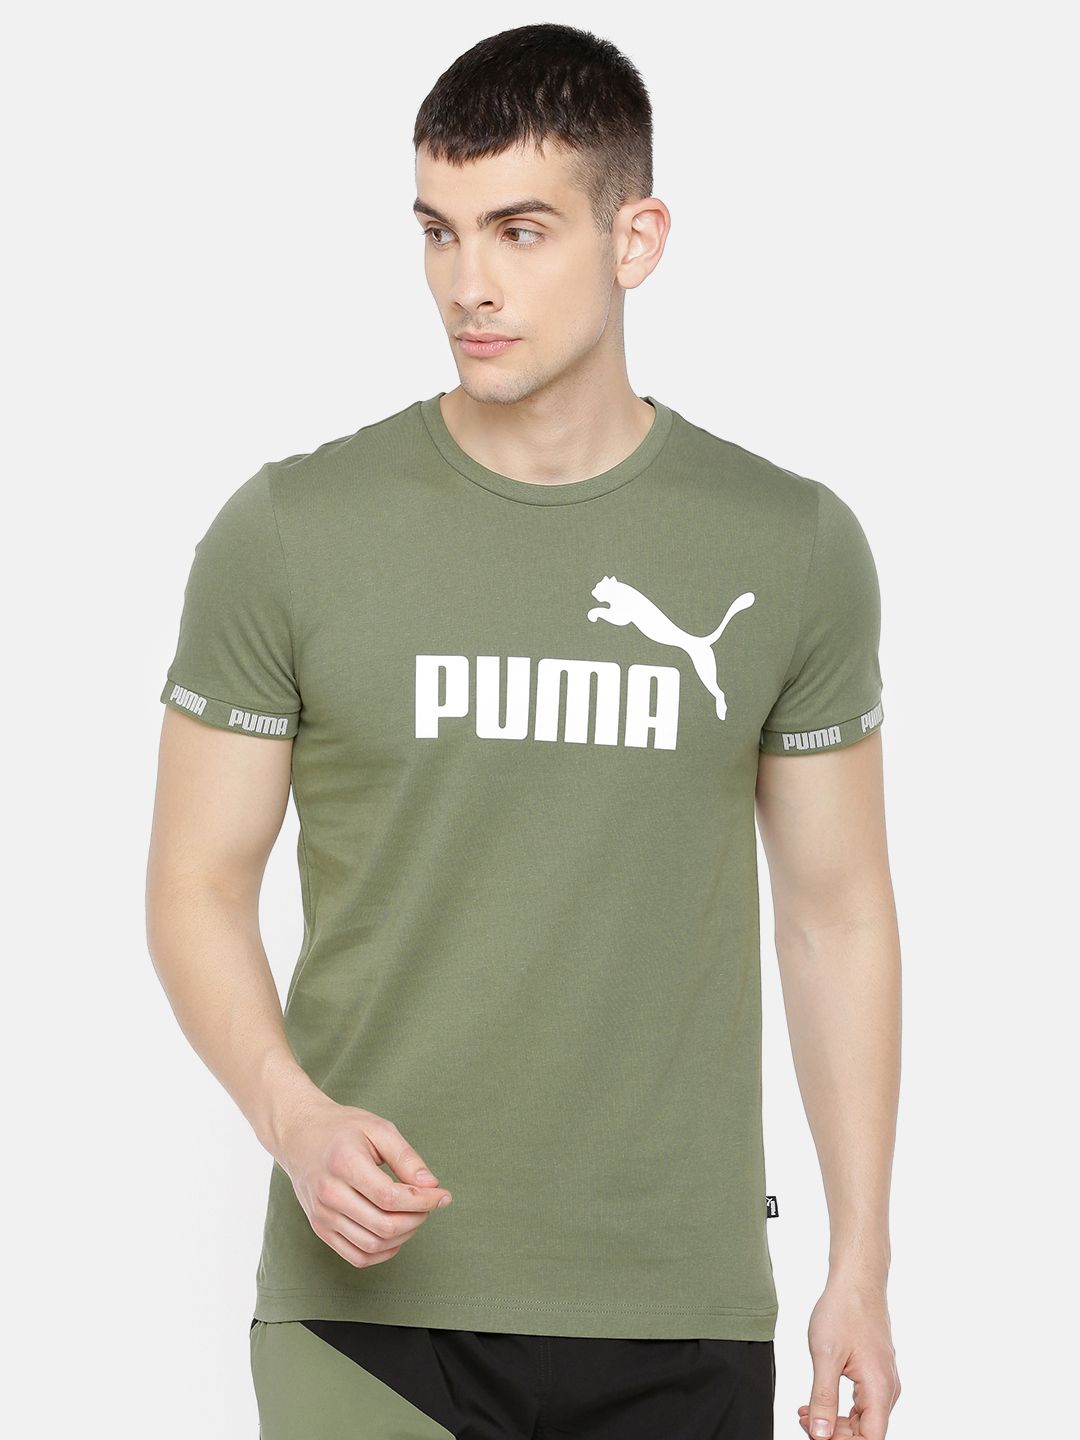 puma olive green t shirt 